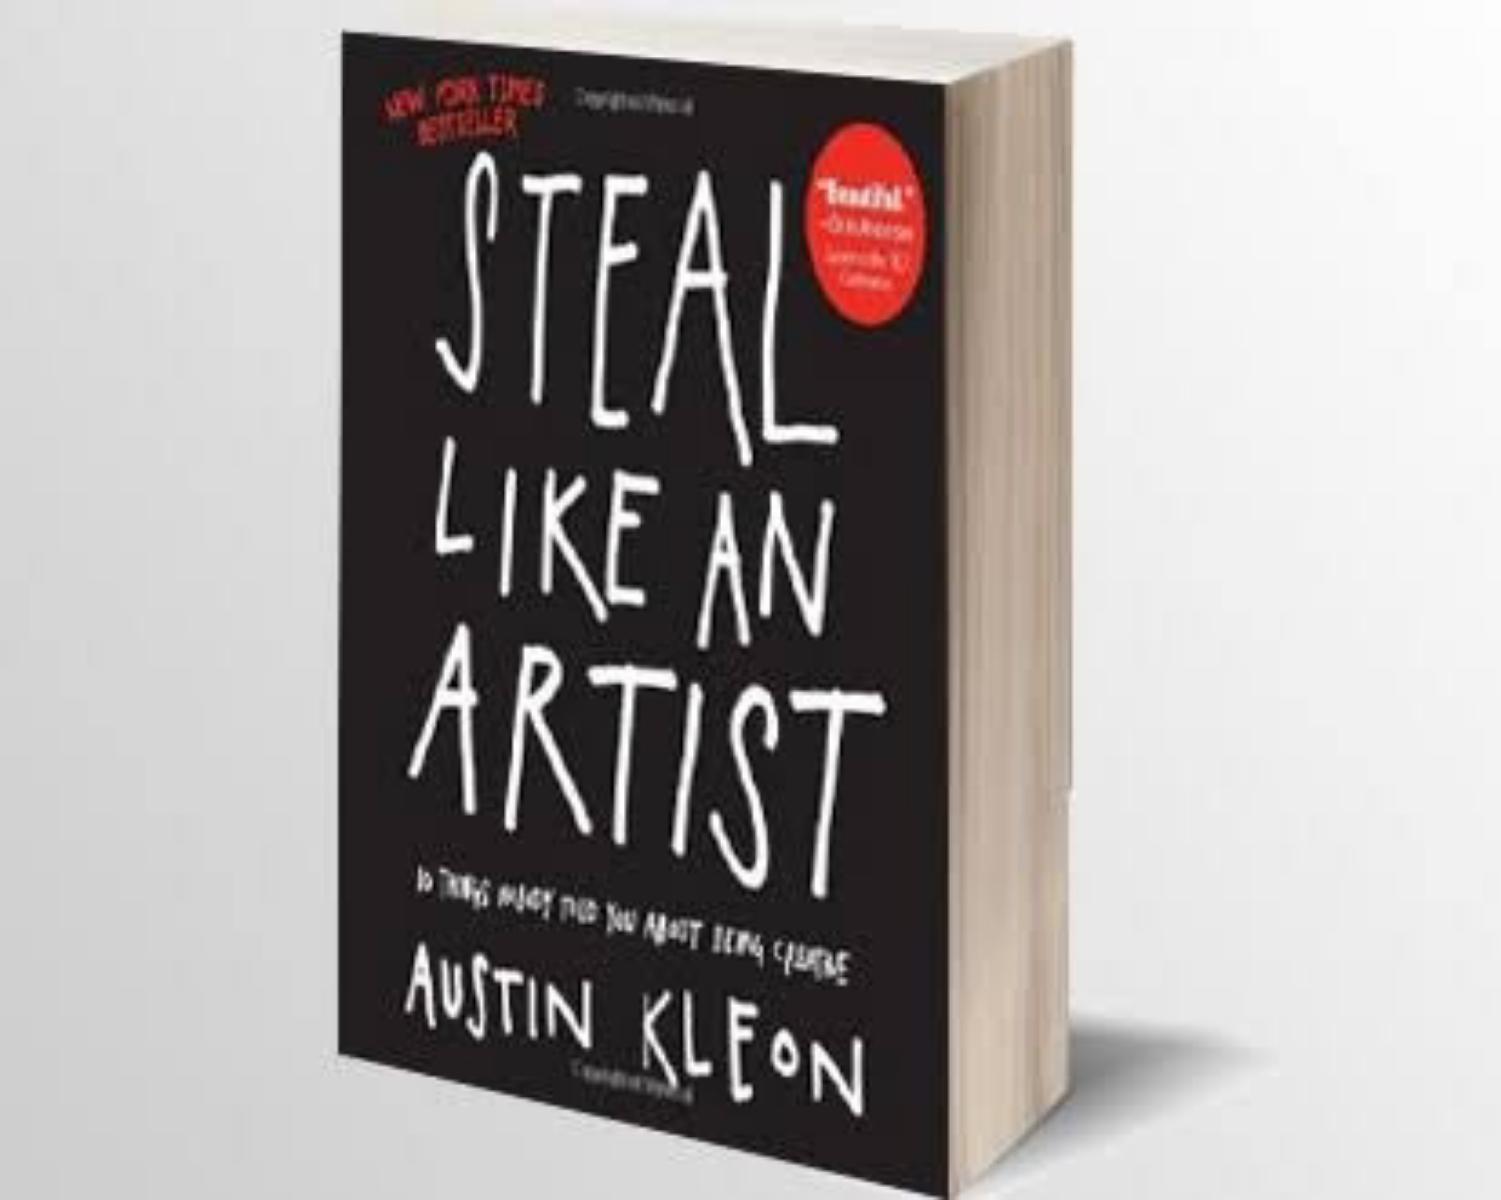 "Steal like an artist" by Austin Kleon